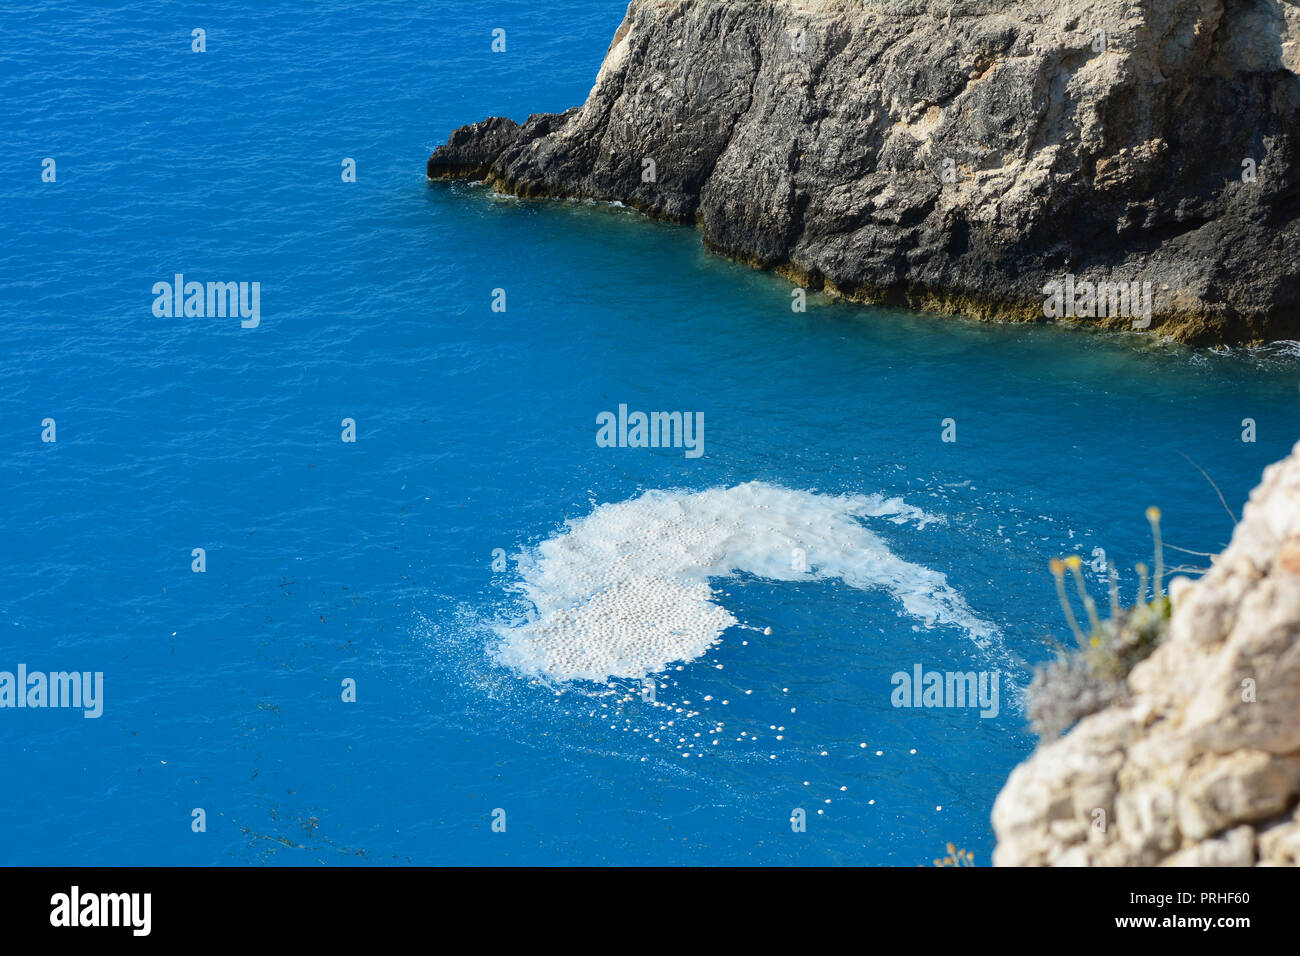 Marine Mycilage, Marine snow or Sea snots  near cliffs in Ionian Sea Stock Photo